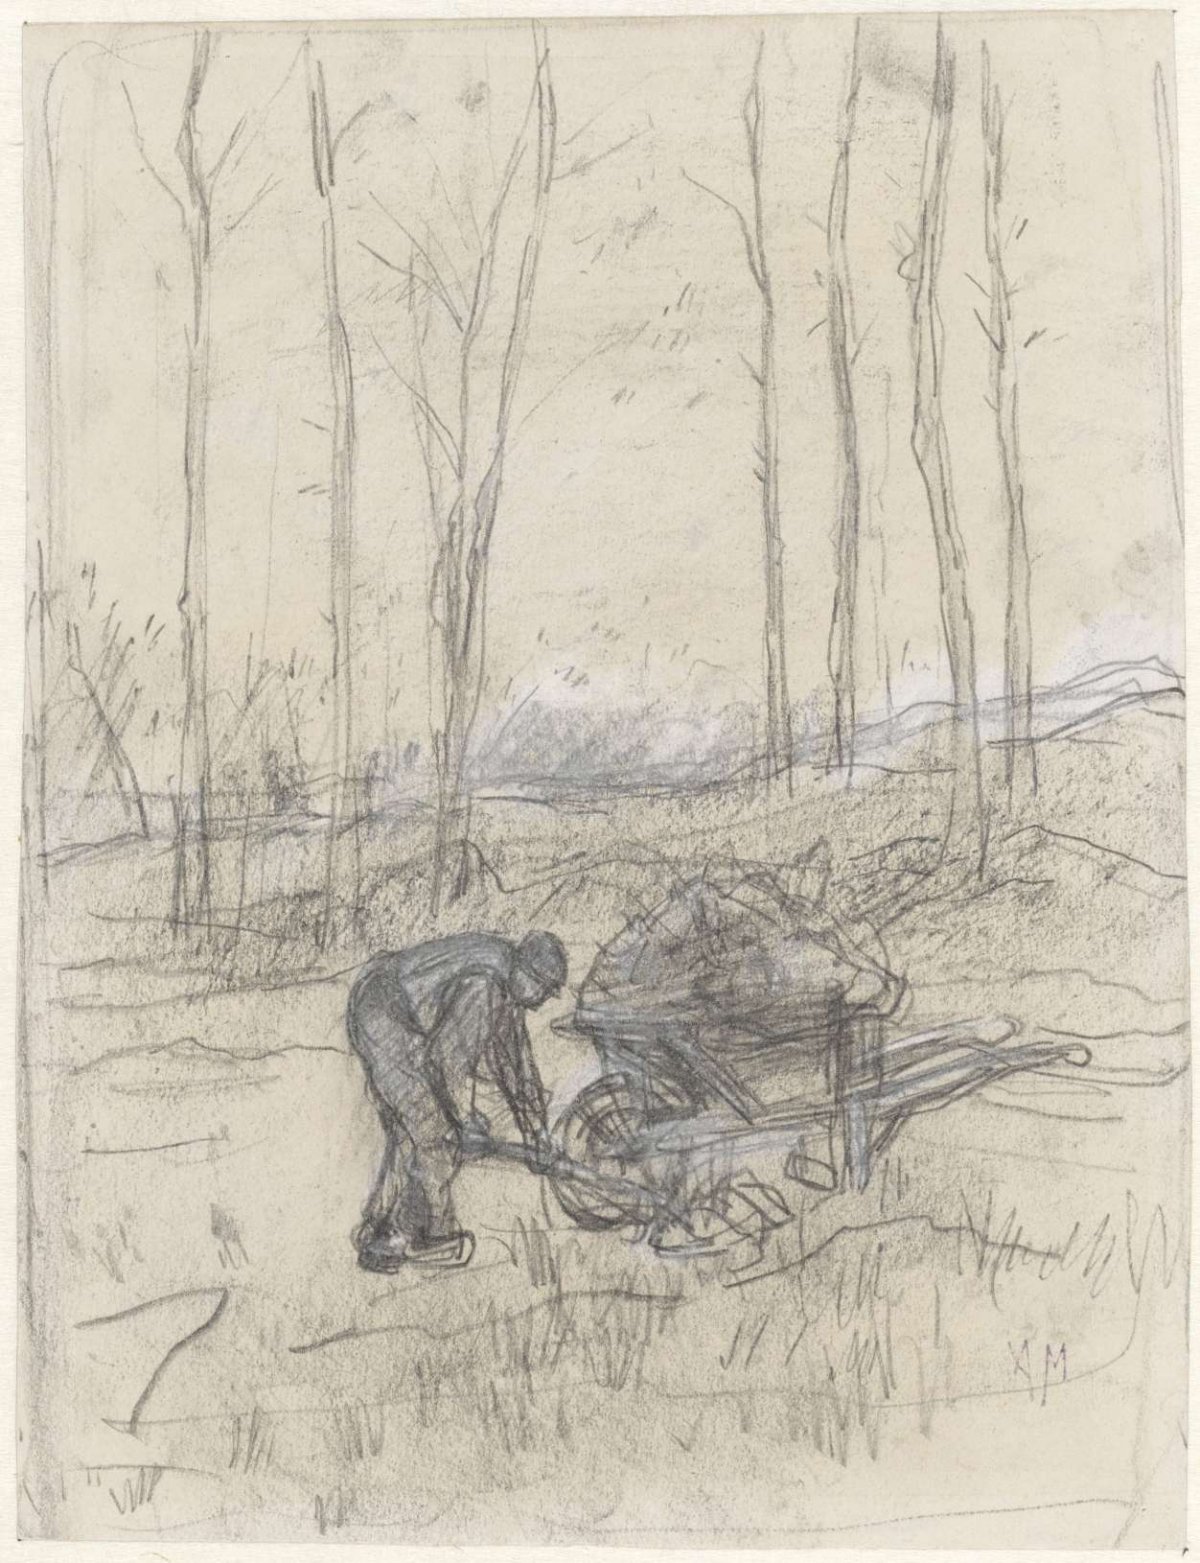 Farmer at work with a wheelbarrow in the forest, Anton Mauve, 1848 - 1888